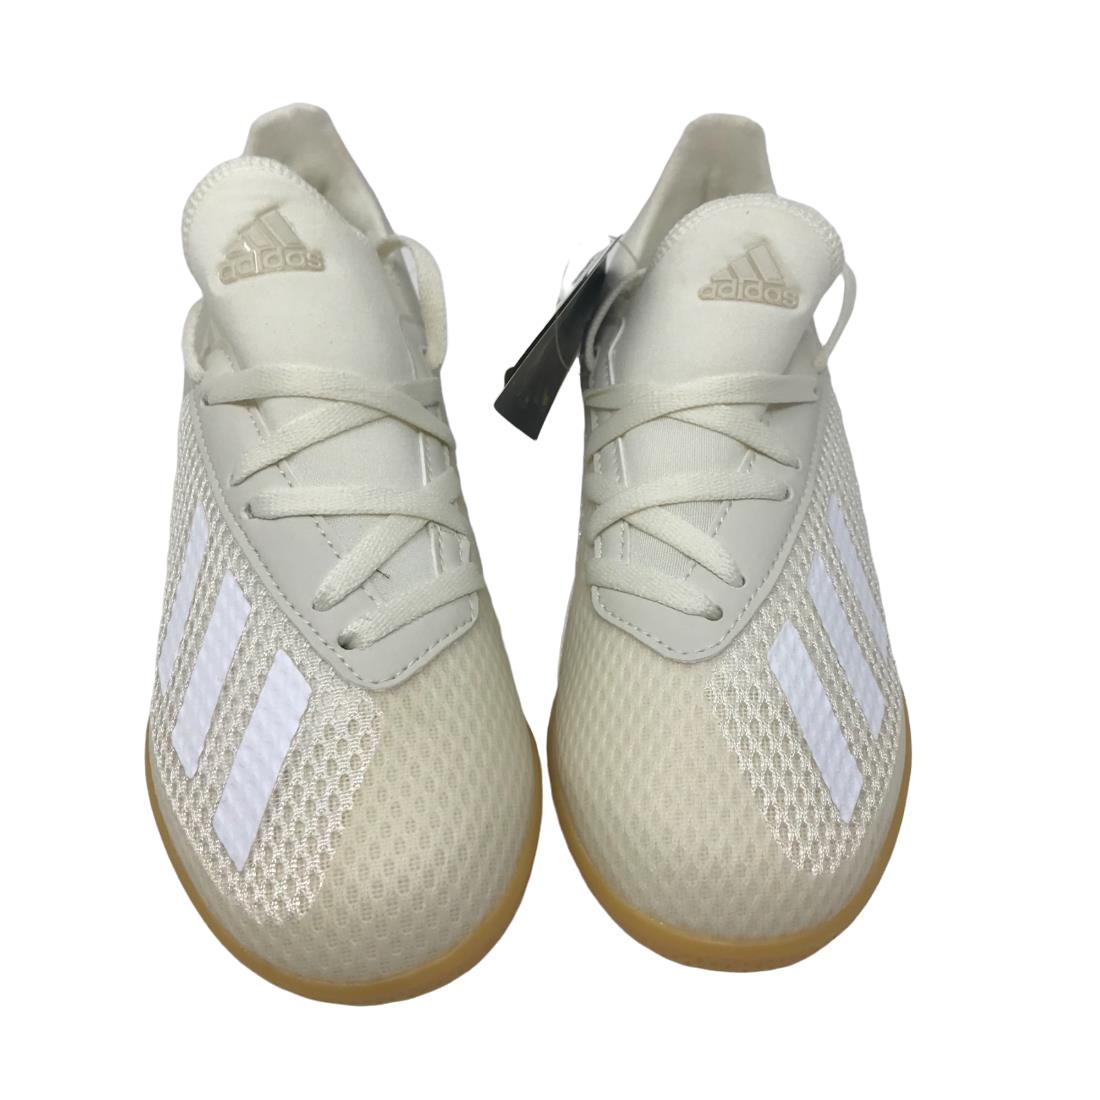 Adidas Unisex Kids Tango Indoor Soccer Shoe Size 1Y